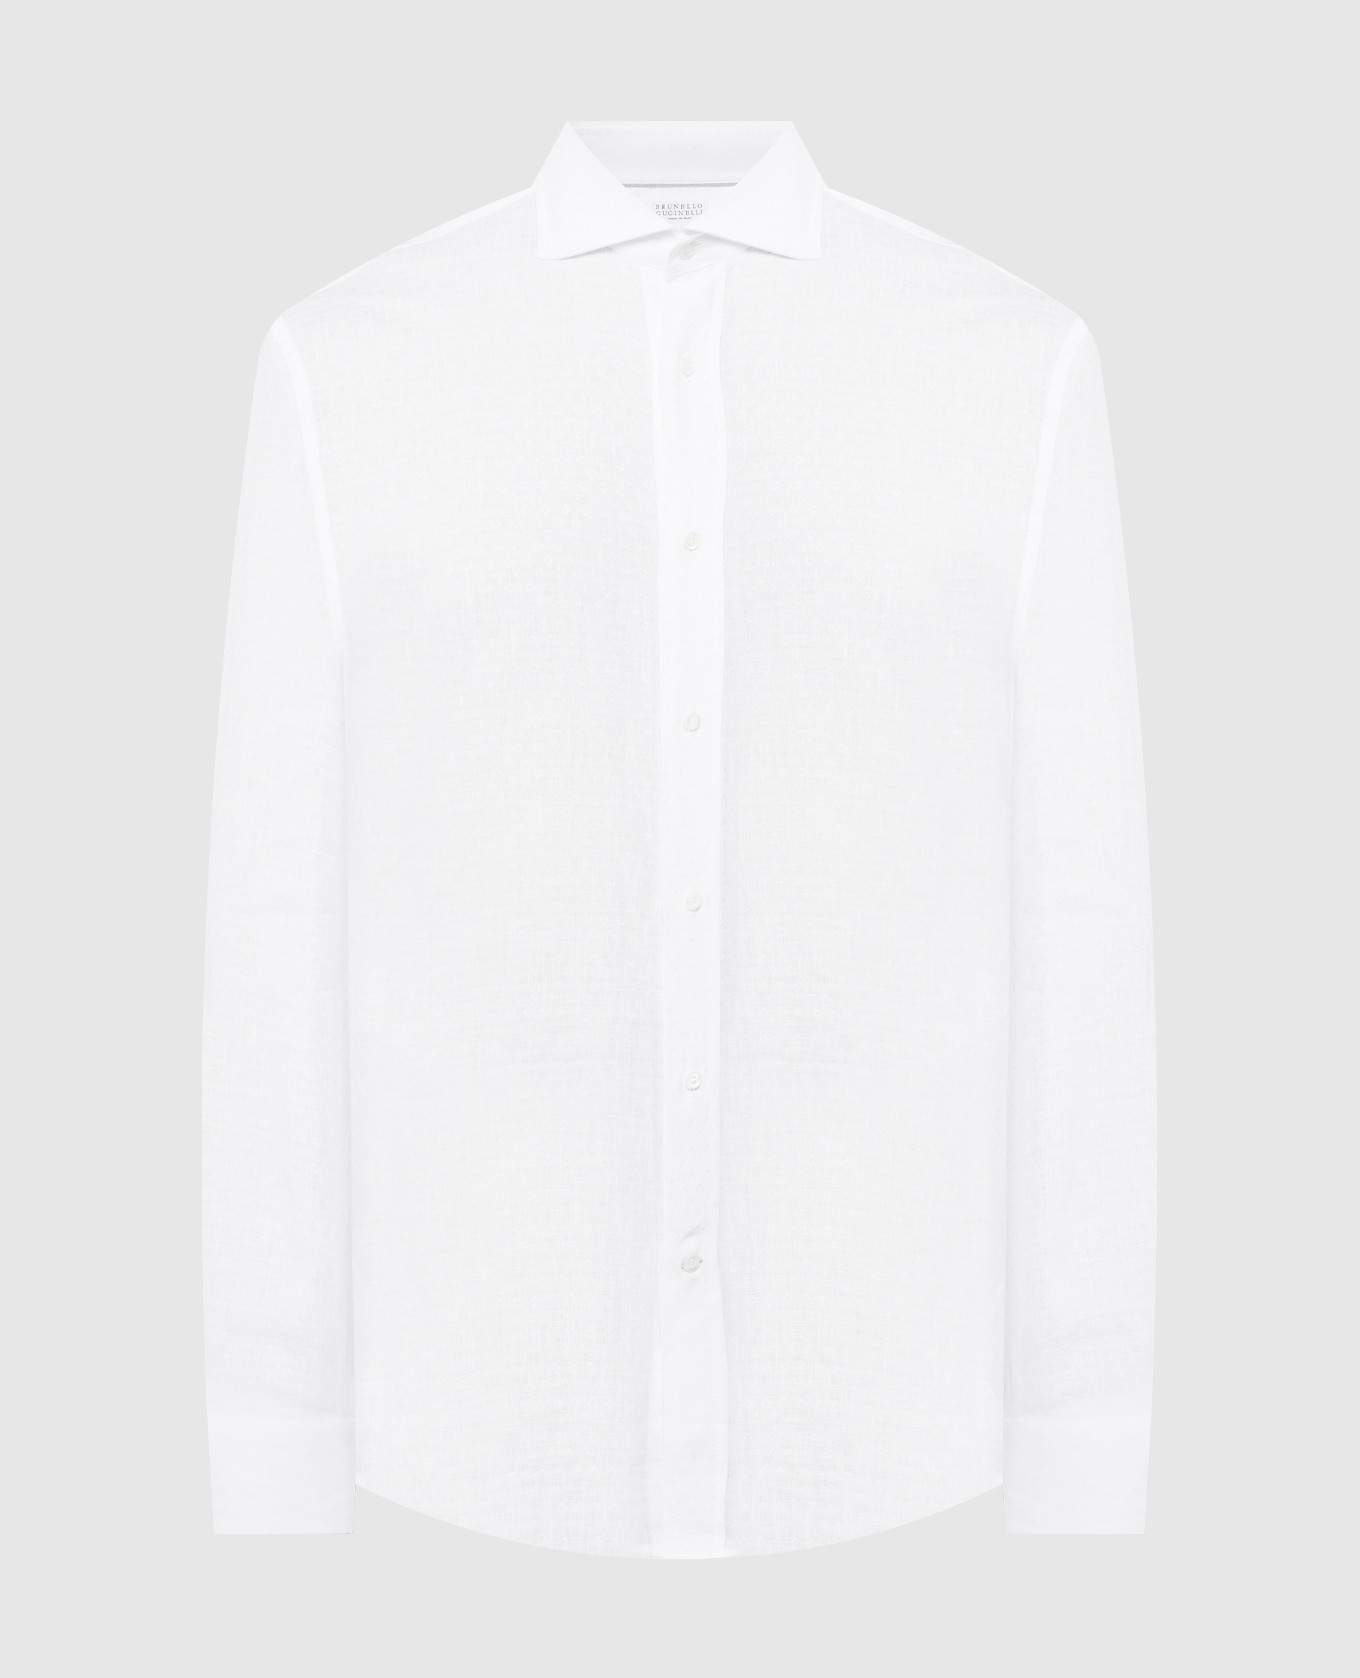 White shirt with a geometric pattern